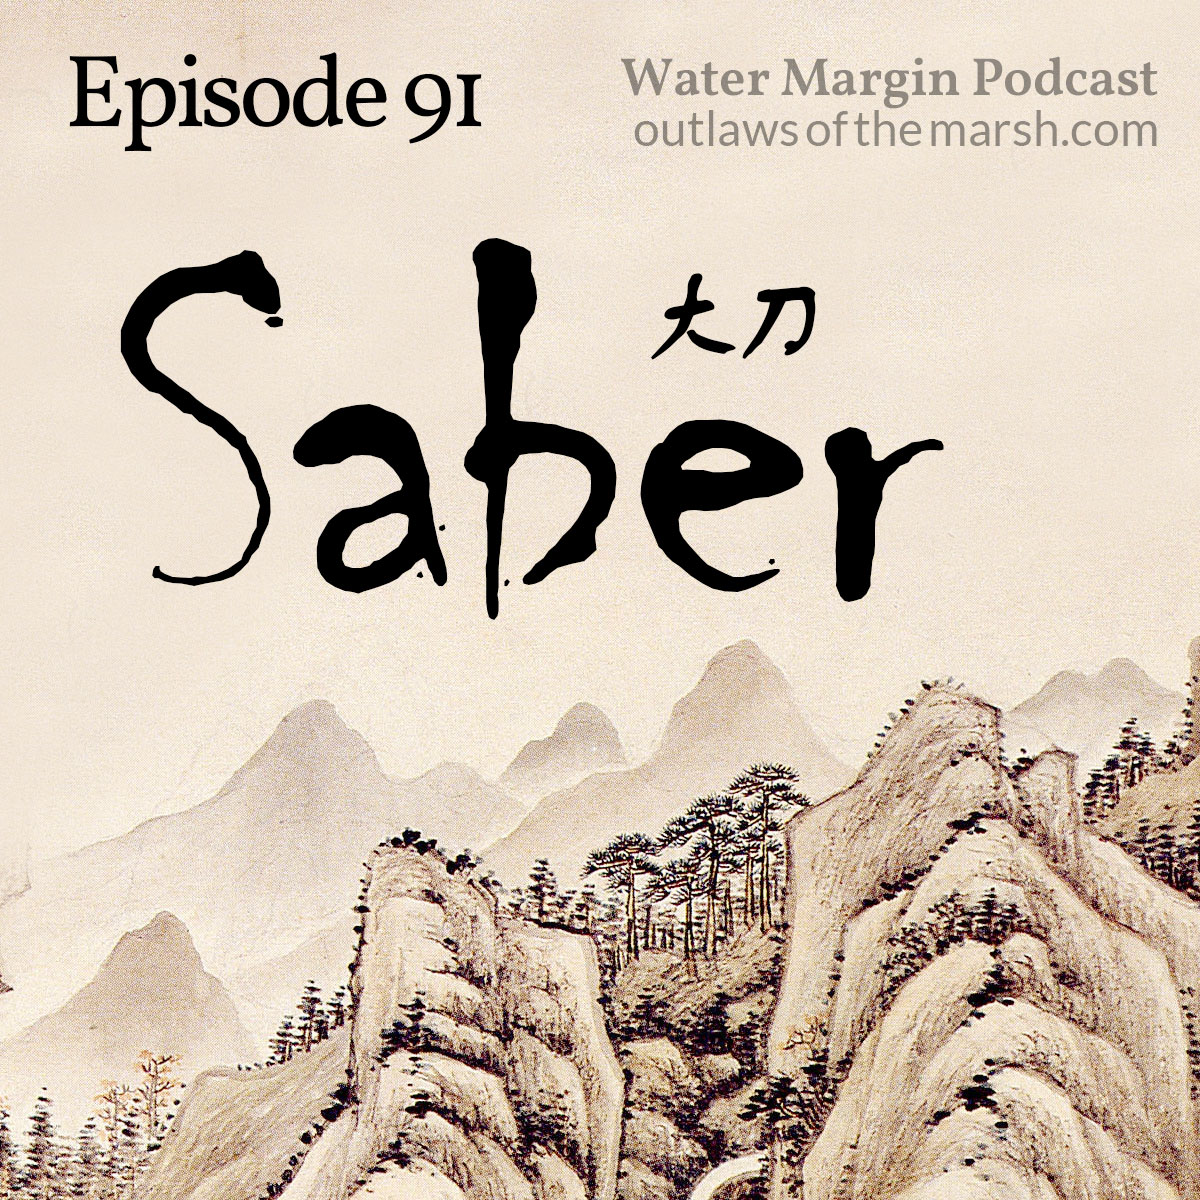 Water Margin Podcast: Episode 091